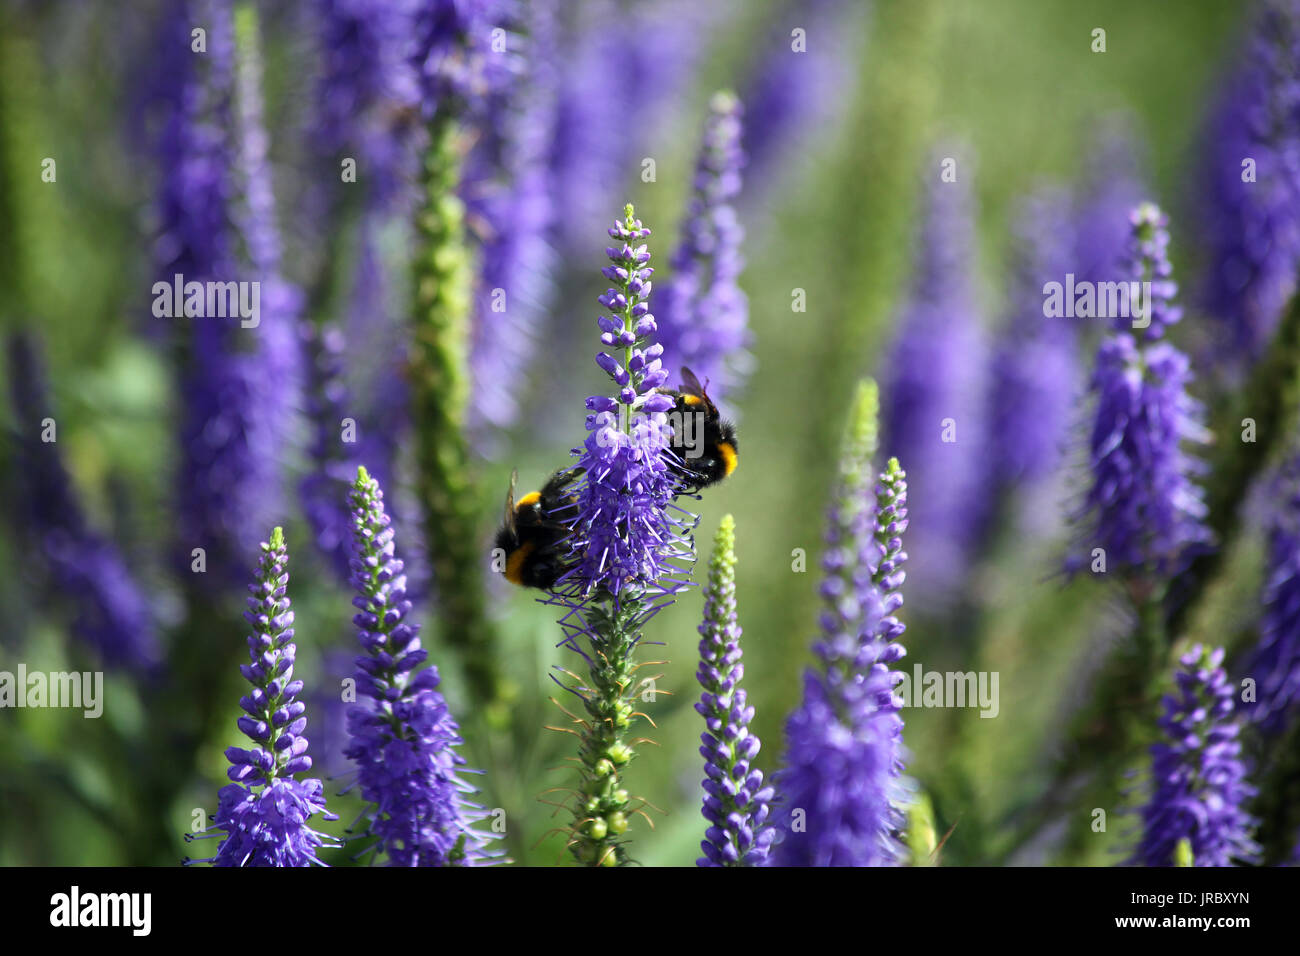 Bees on veronica Stock Photo - Alamy